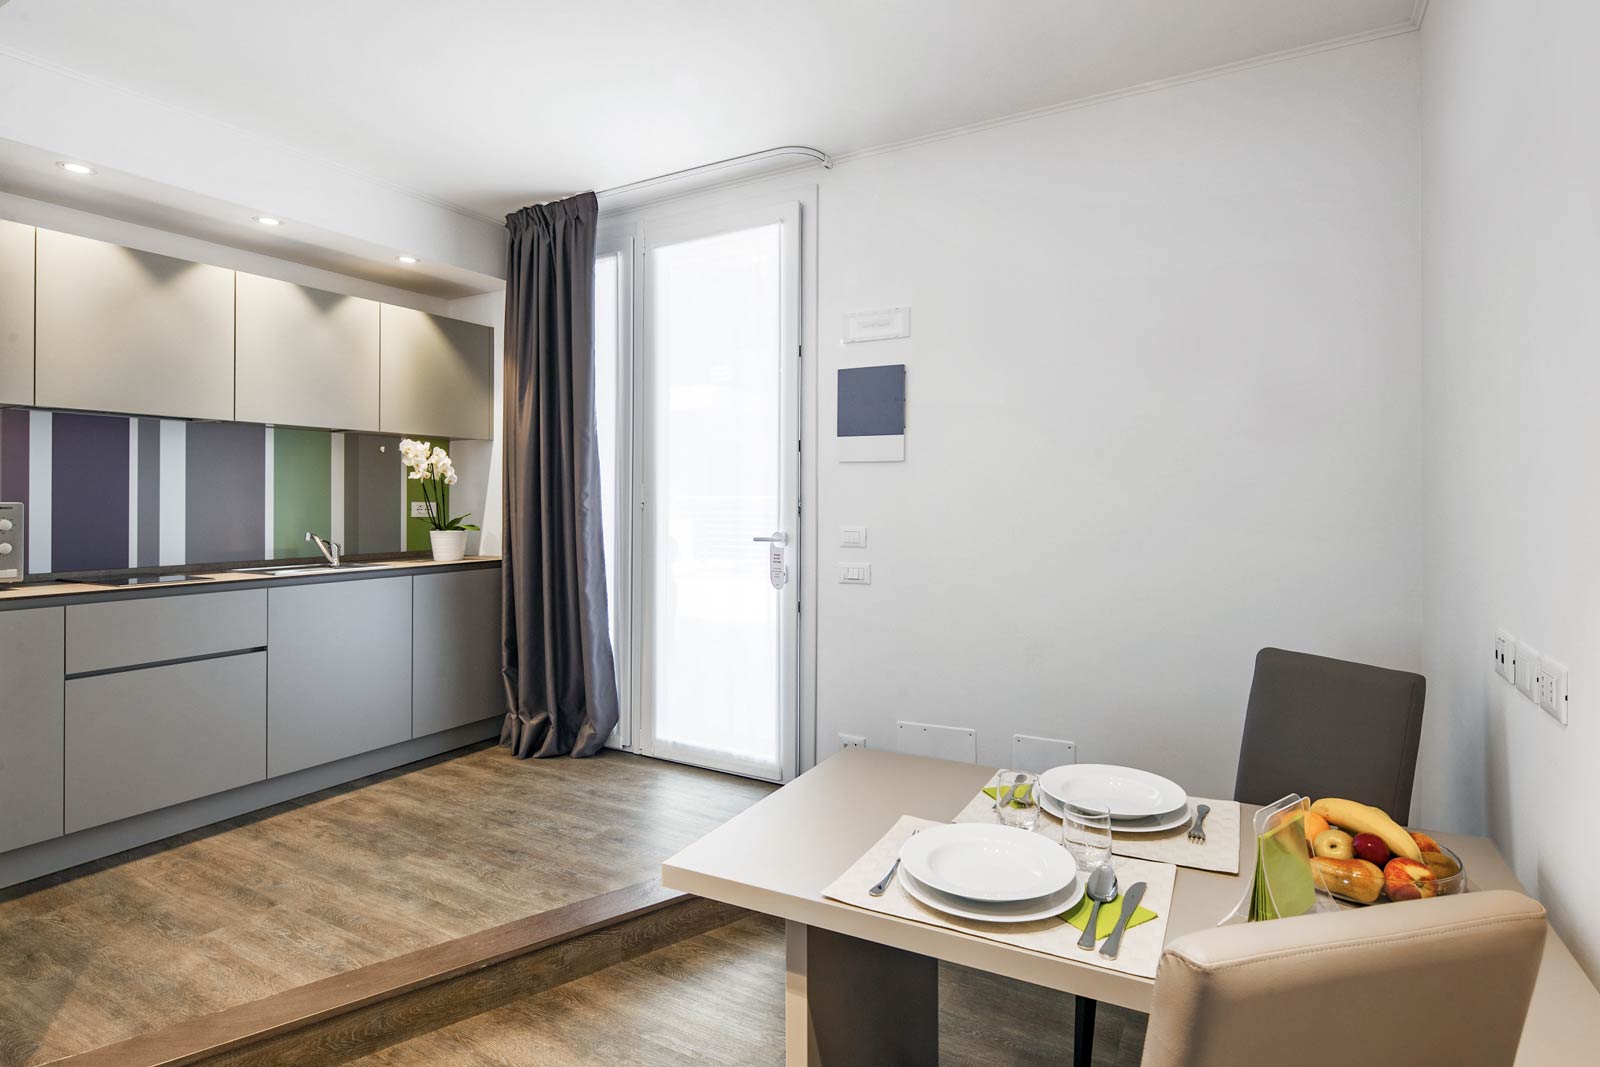 Studio Residence for rent in Milan